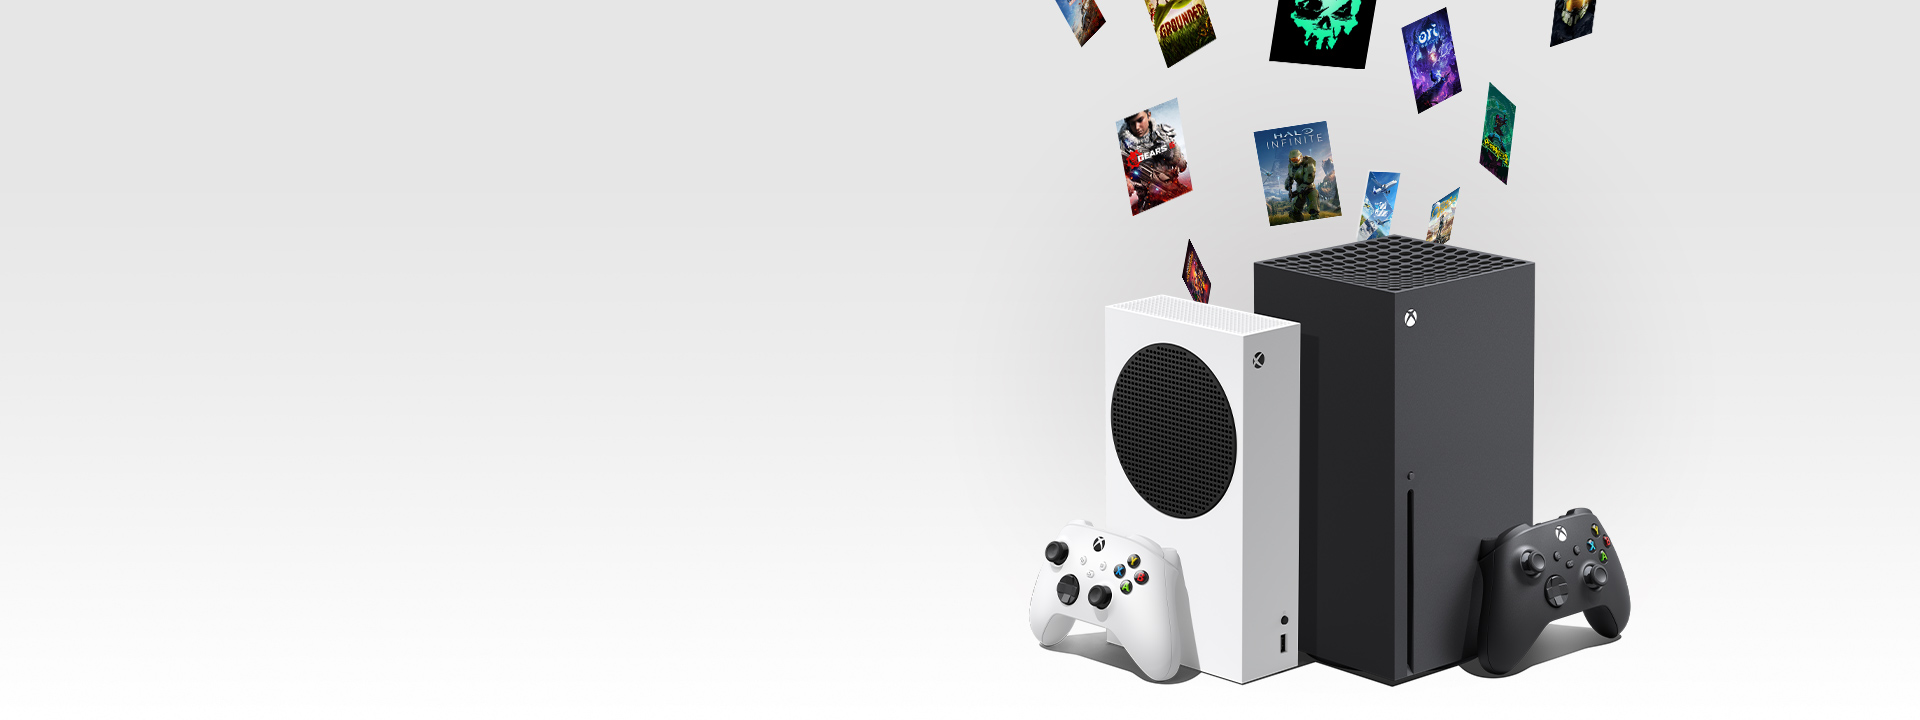 Цифровые игры Xbox загружаются на консоли Xbox Series X и Xbox Series S